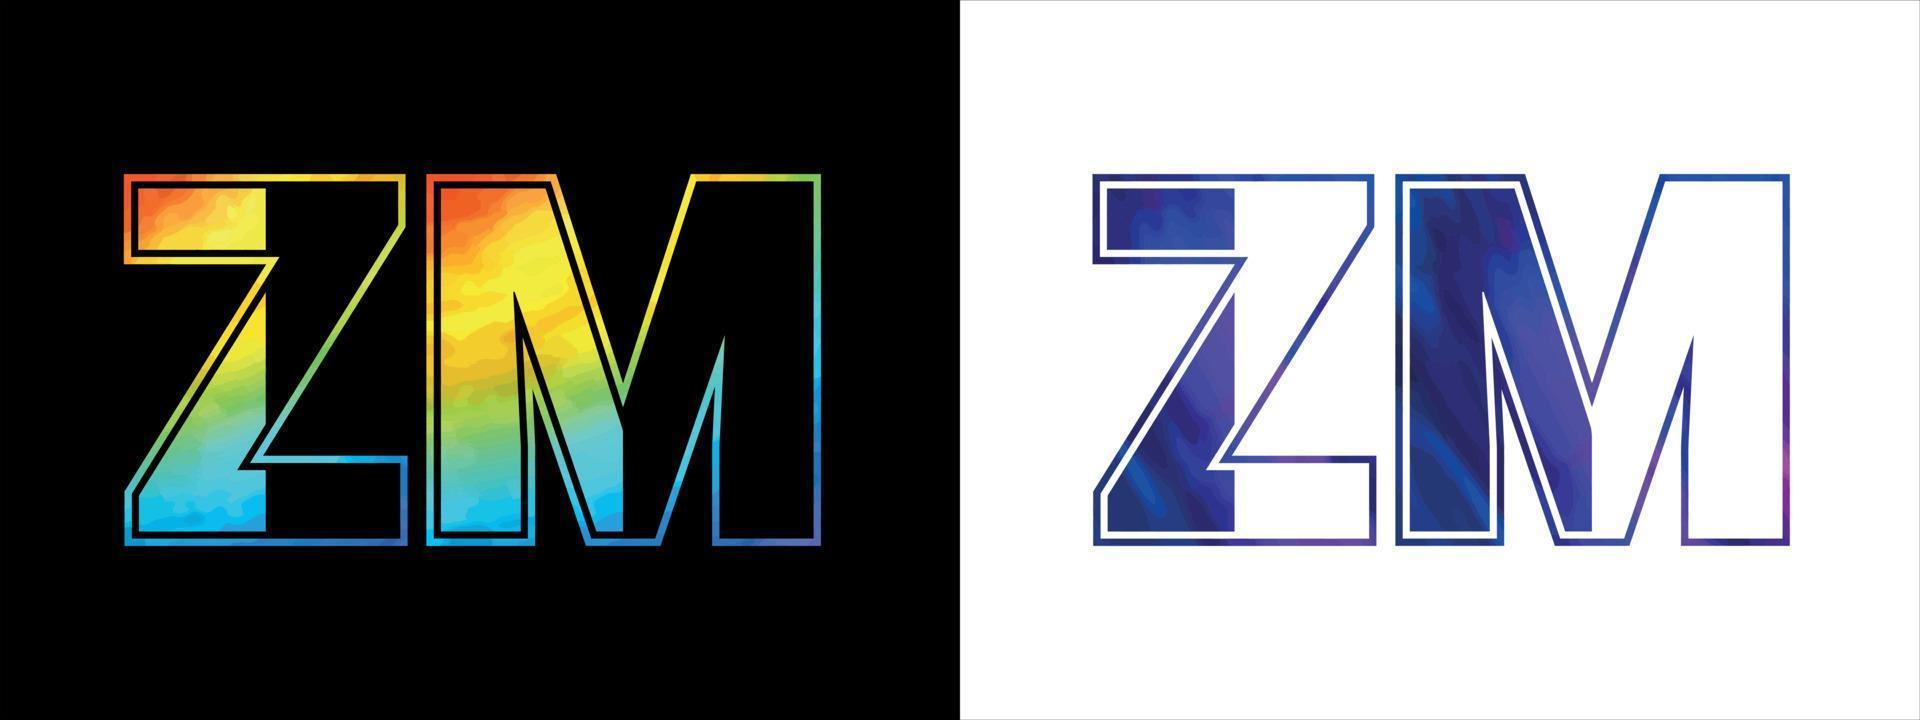 Unique ZM letter logo Icon vector template. Premium stylish alphabet logo design for corporate business